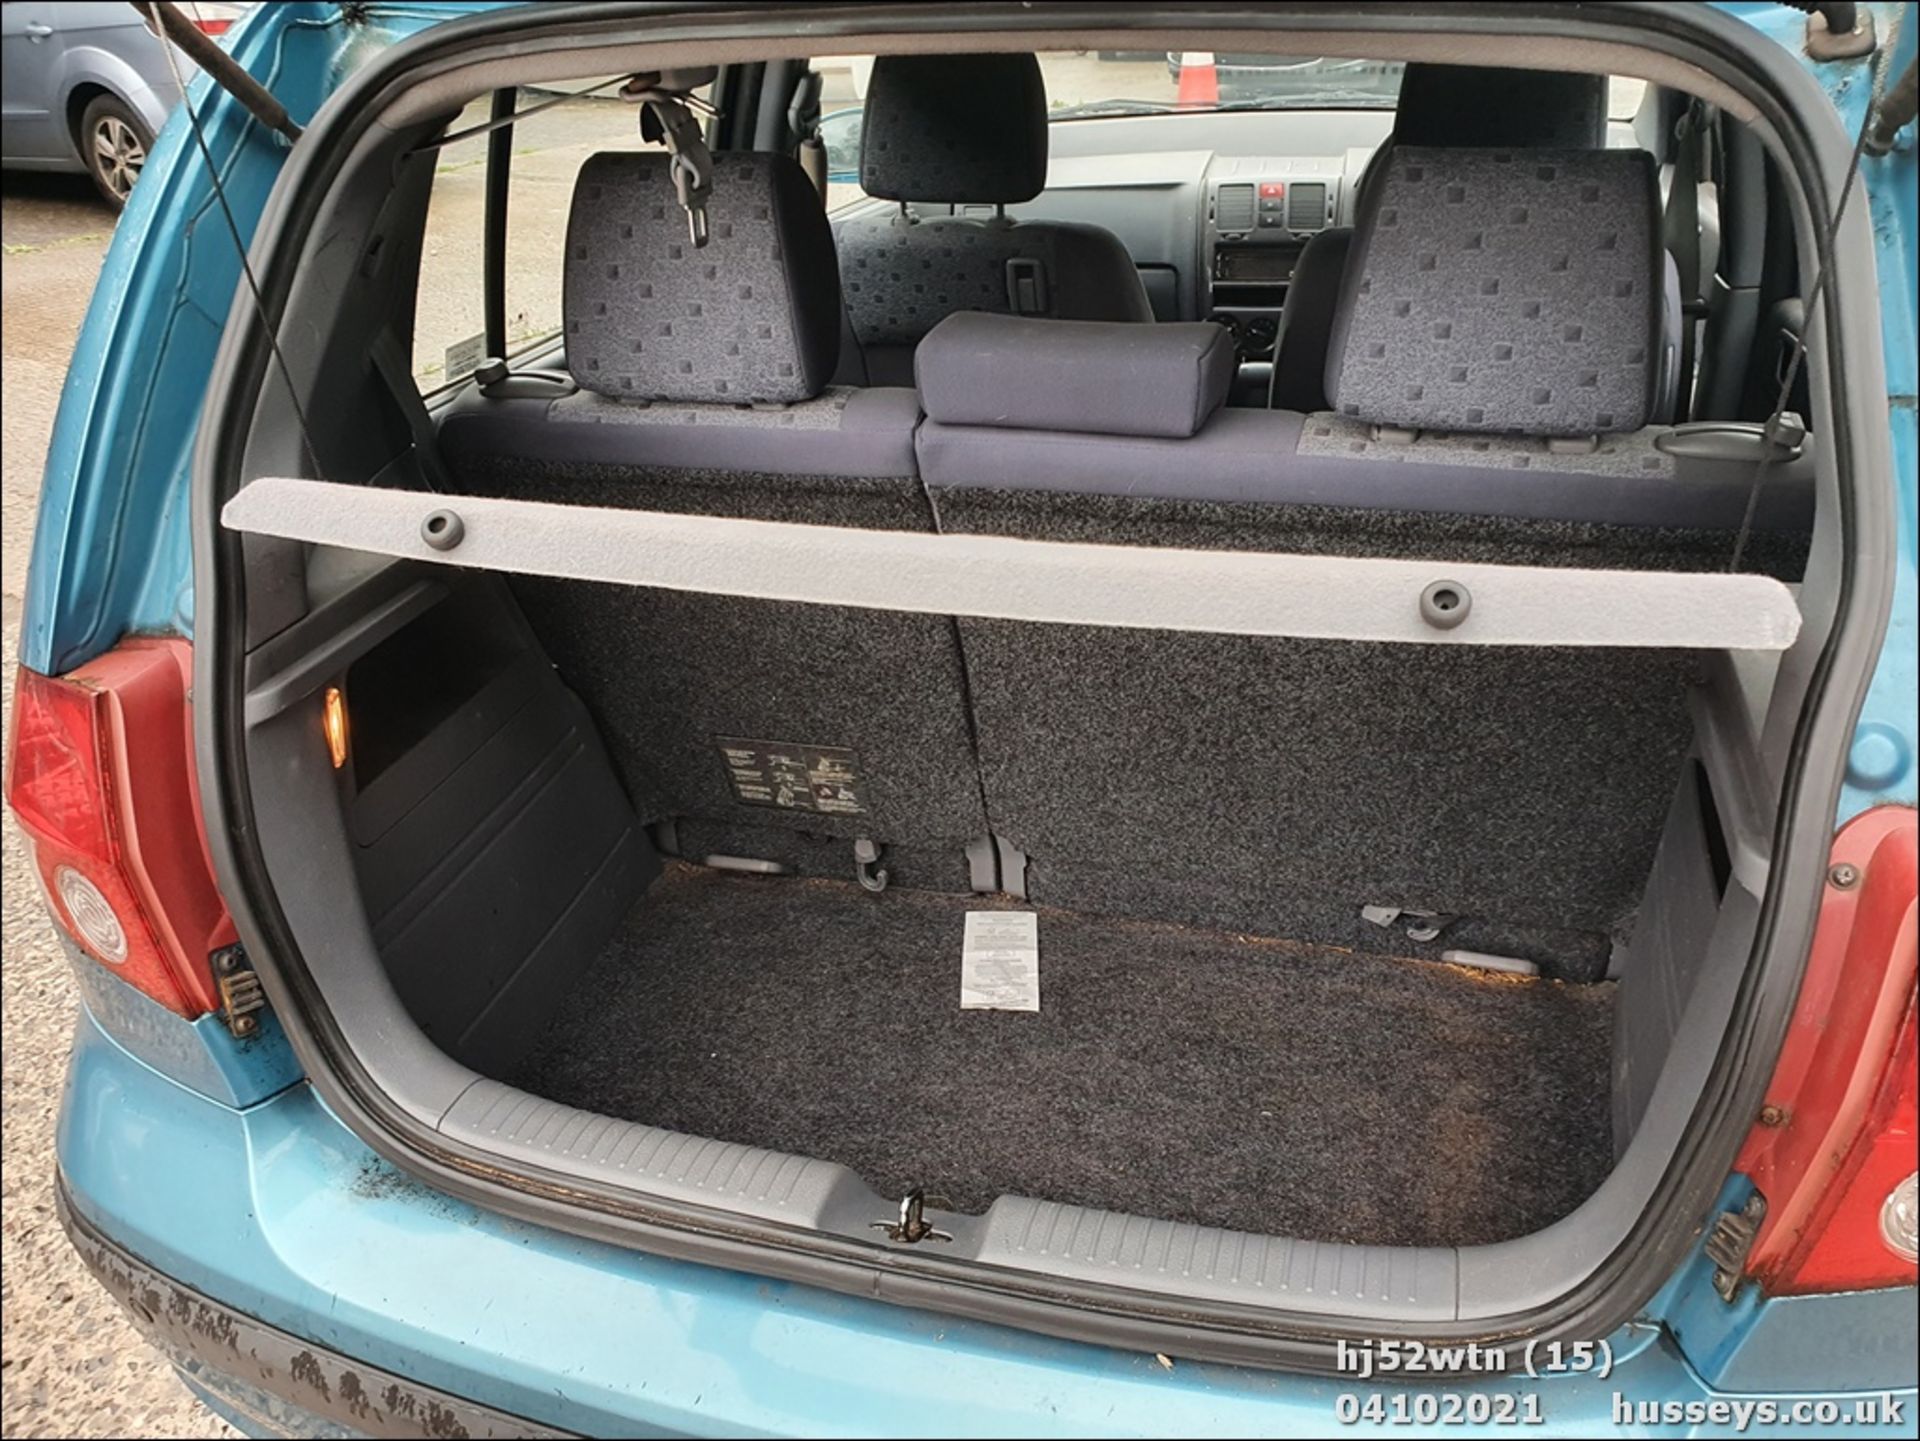 03/52 HYUNDAI GETZ CDX AUTO - 1341cc 5dr Hatchback (Blue, 54k) - Image 15 of 20